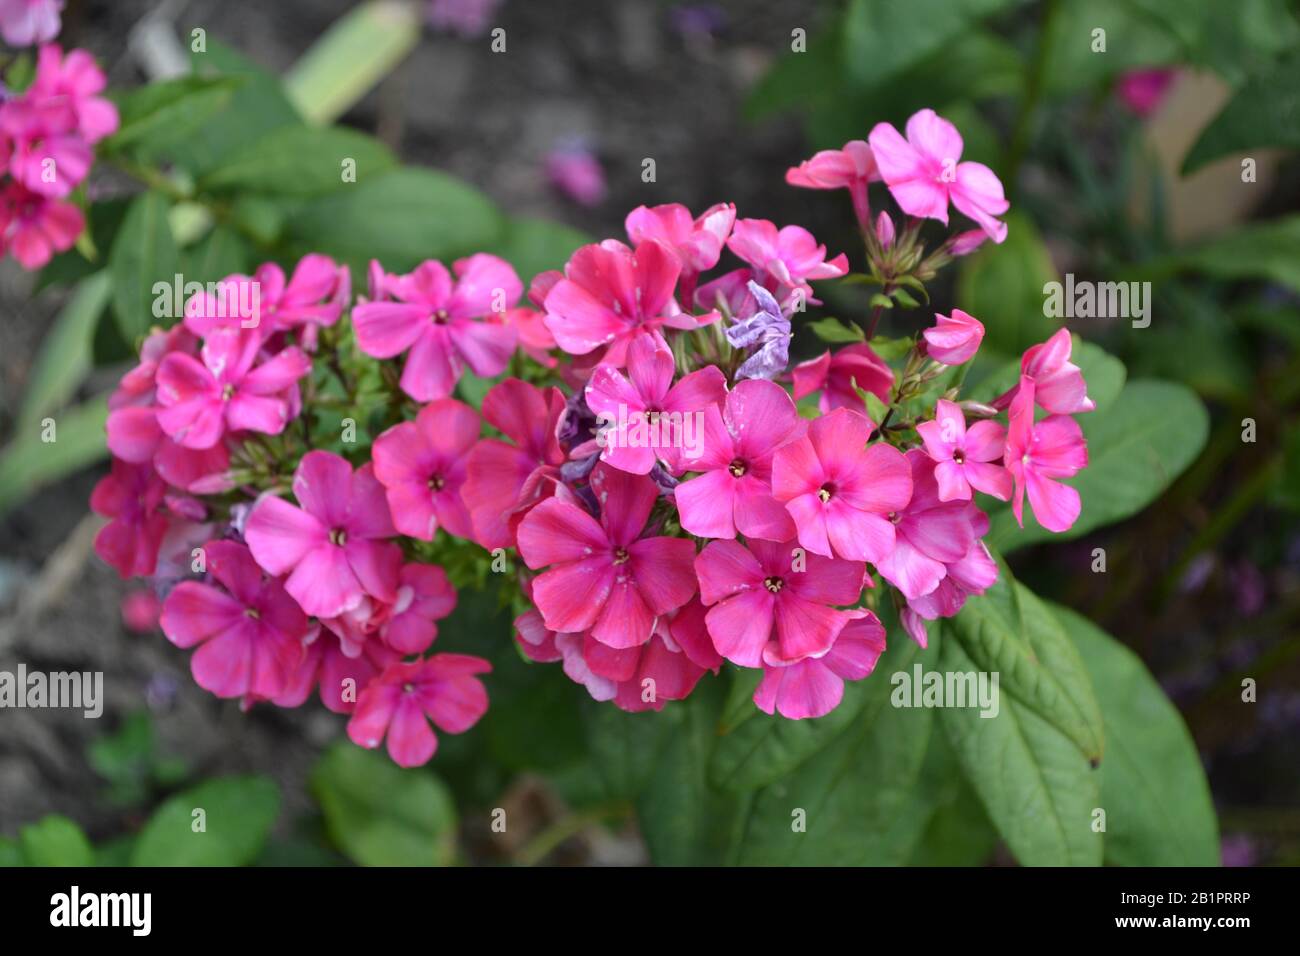 Phlox. Polemoniaceae. Growing flowers. Flowerbed. Garden. Floriculture. Pink summery. Beautiful flowers. Green leaves. Bushes. Horizontal photo Stock Photo